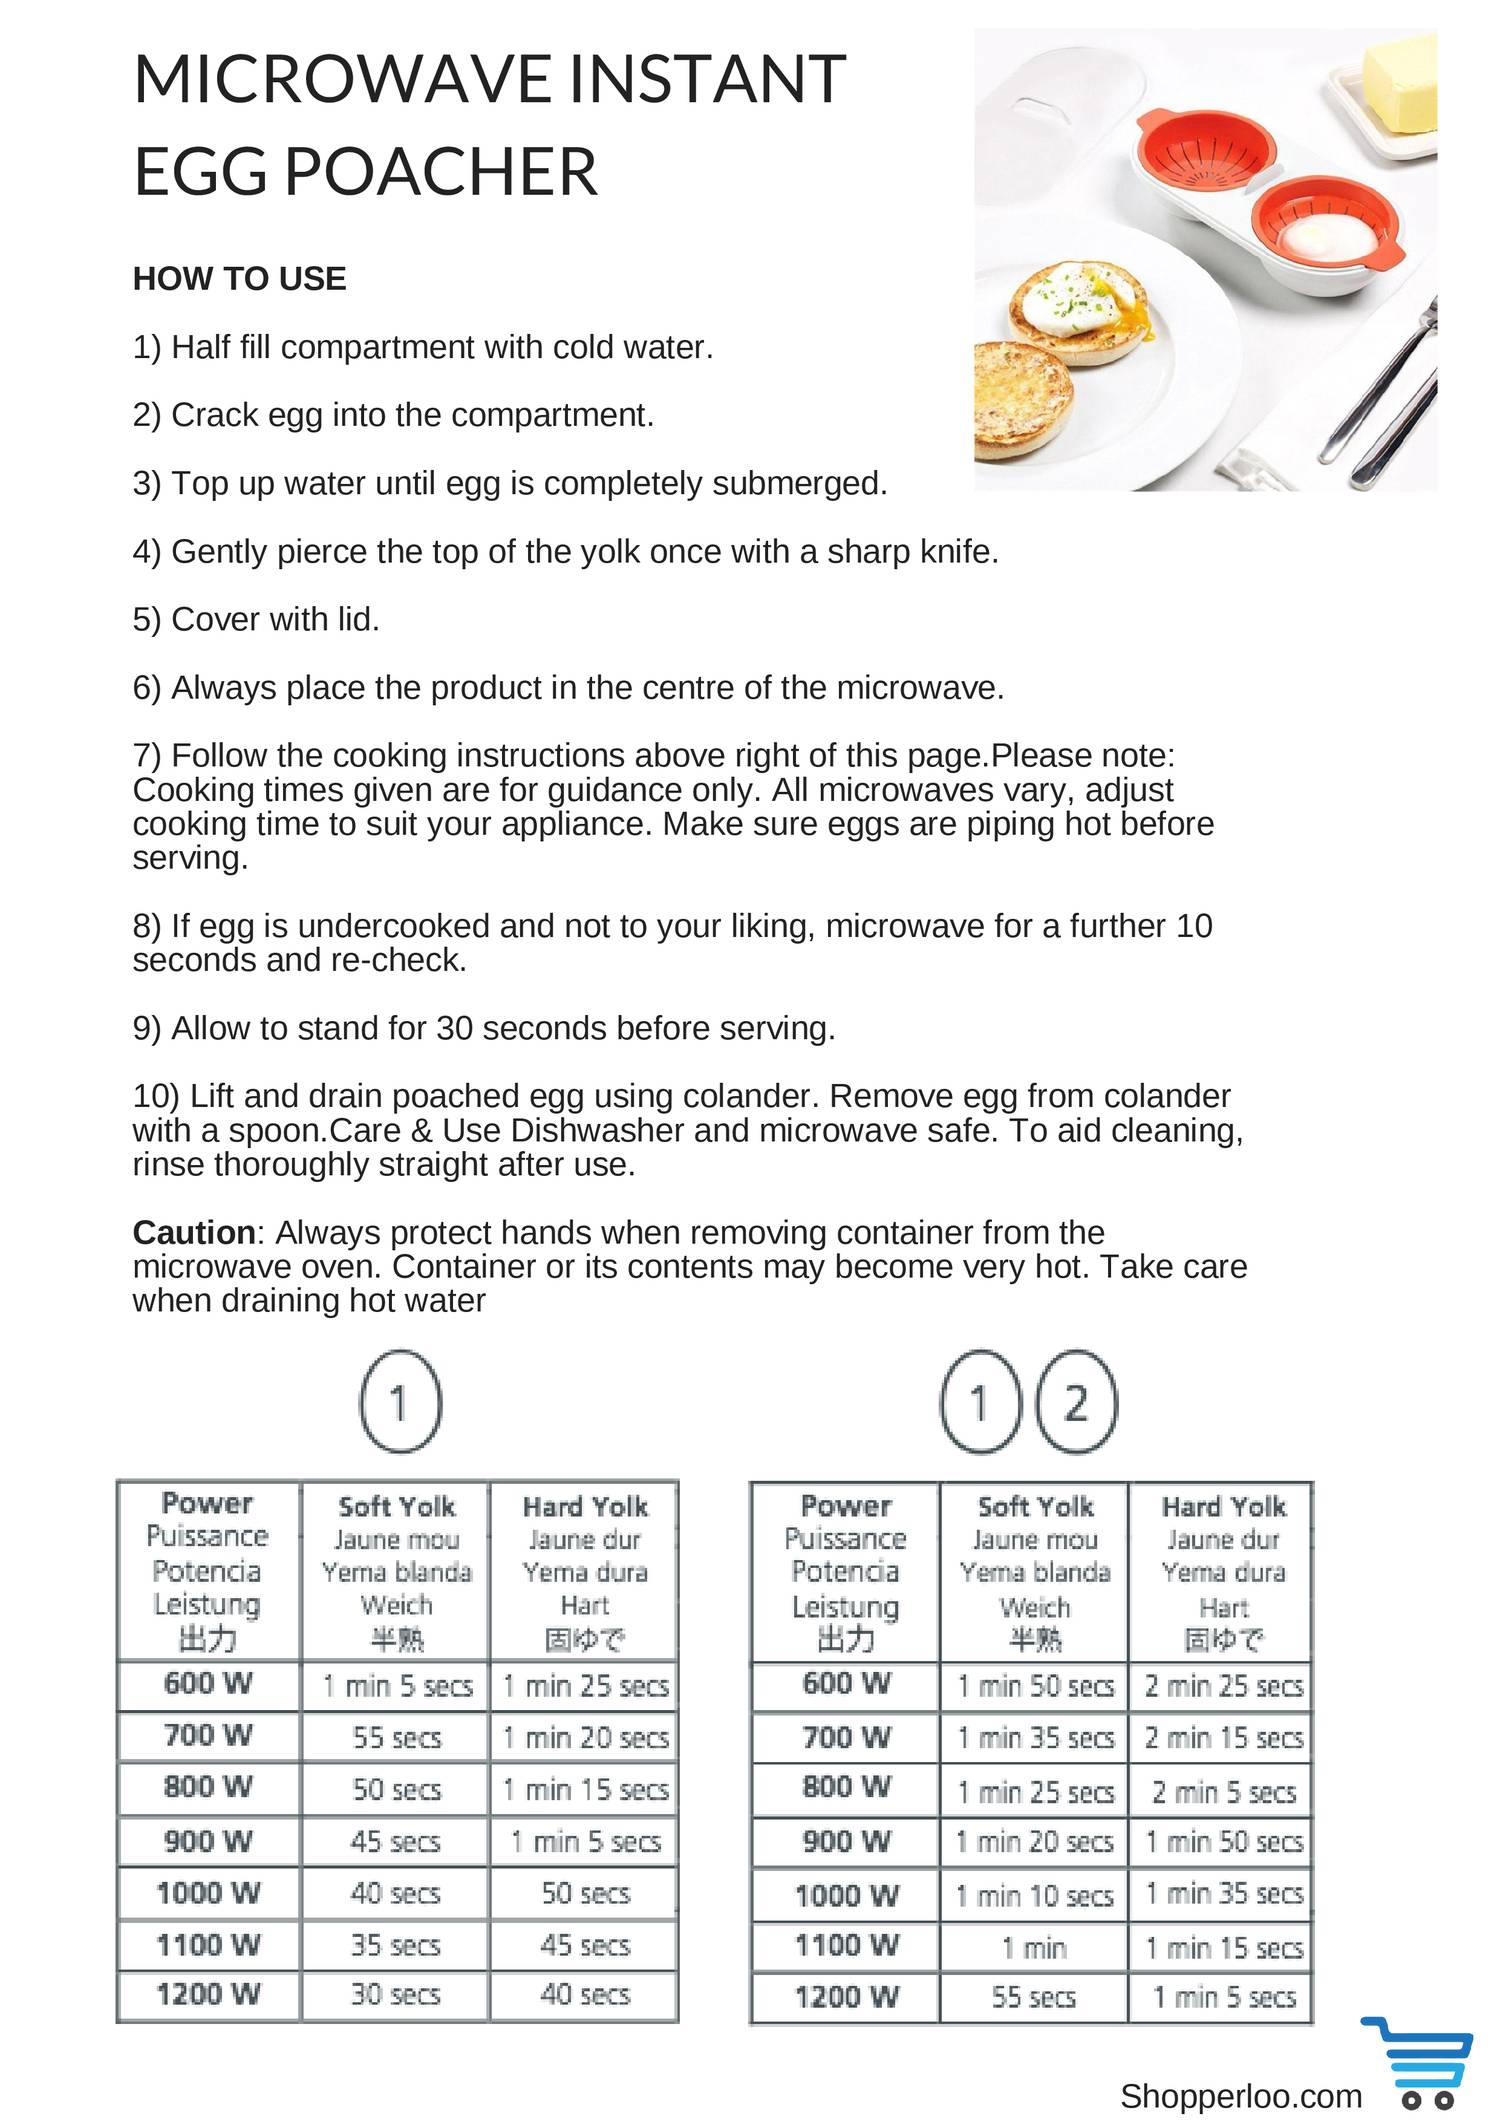 Eggpod 7071 Egg Cooker Wireless Microwave Instruction Manual